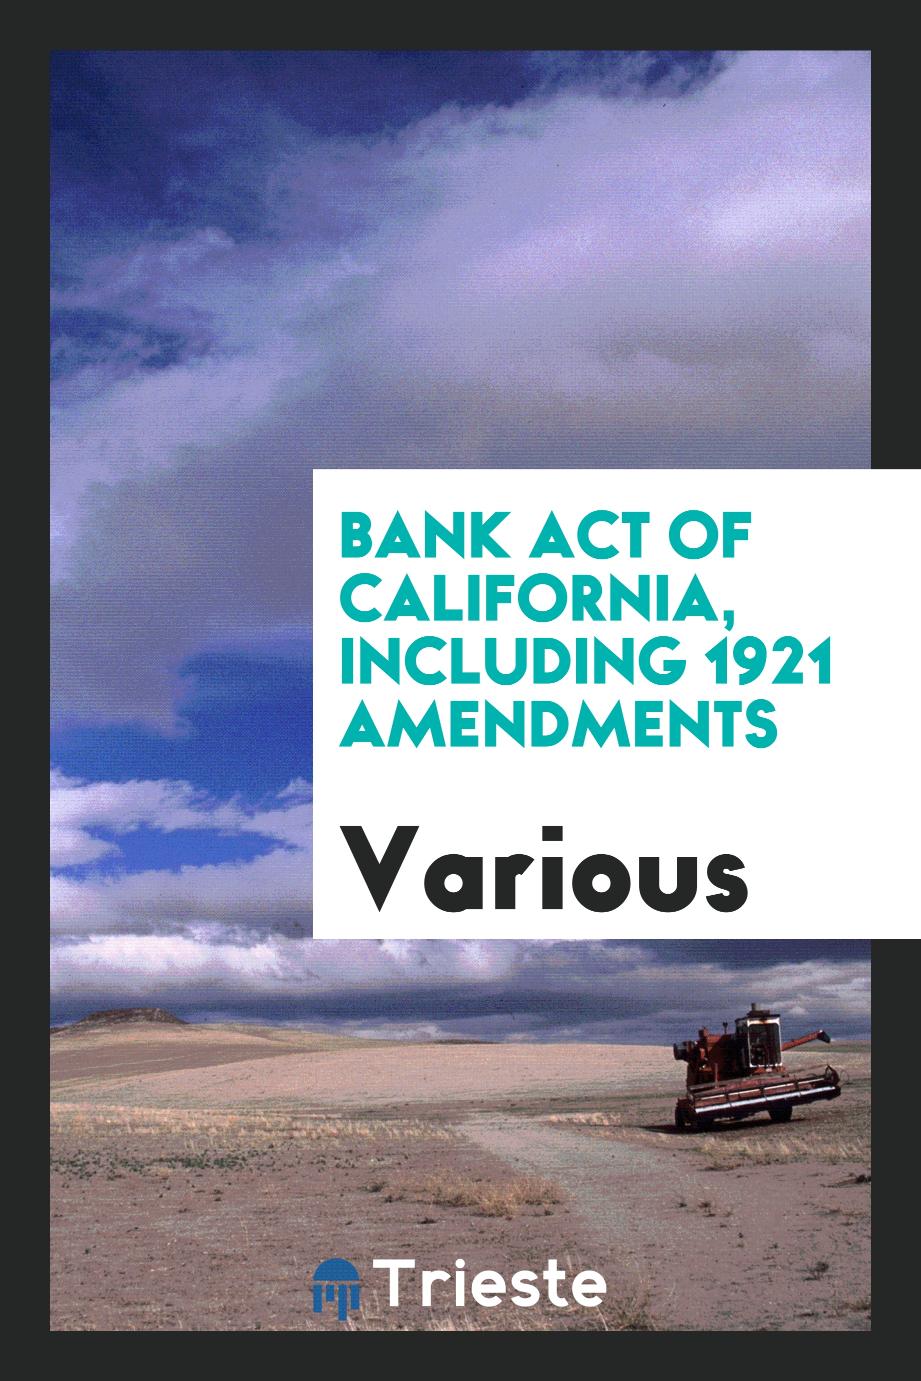 Bank Act of California, including 1921 amendments